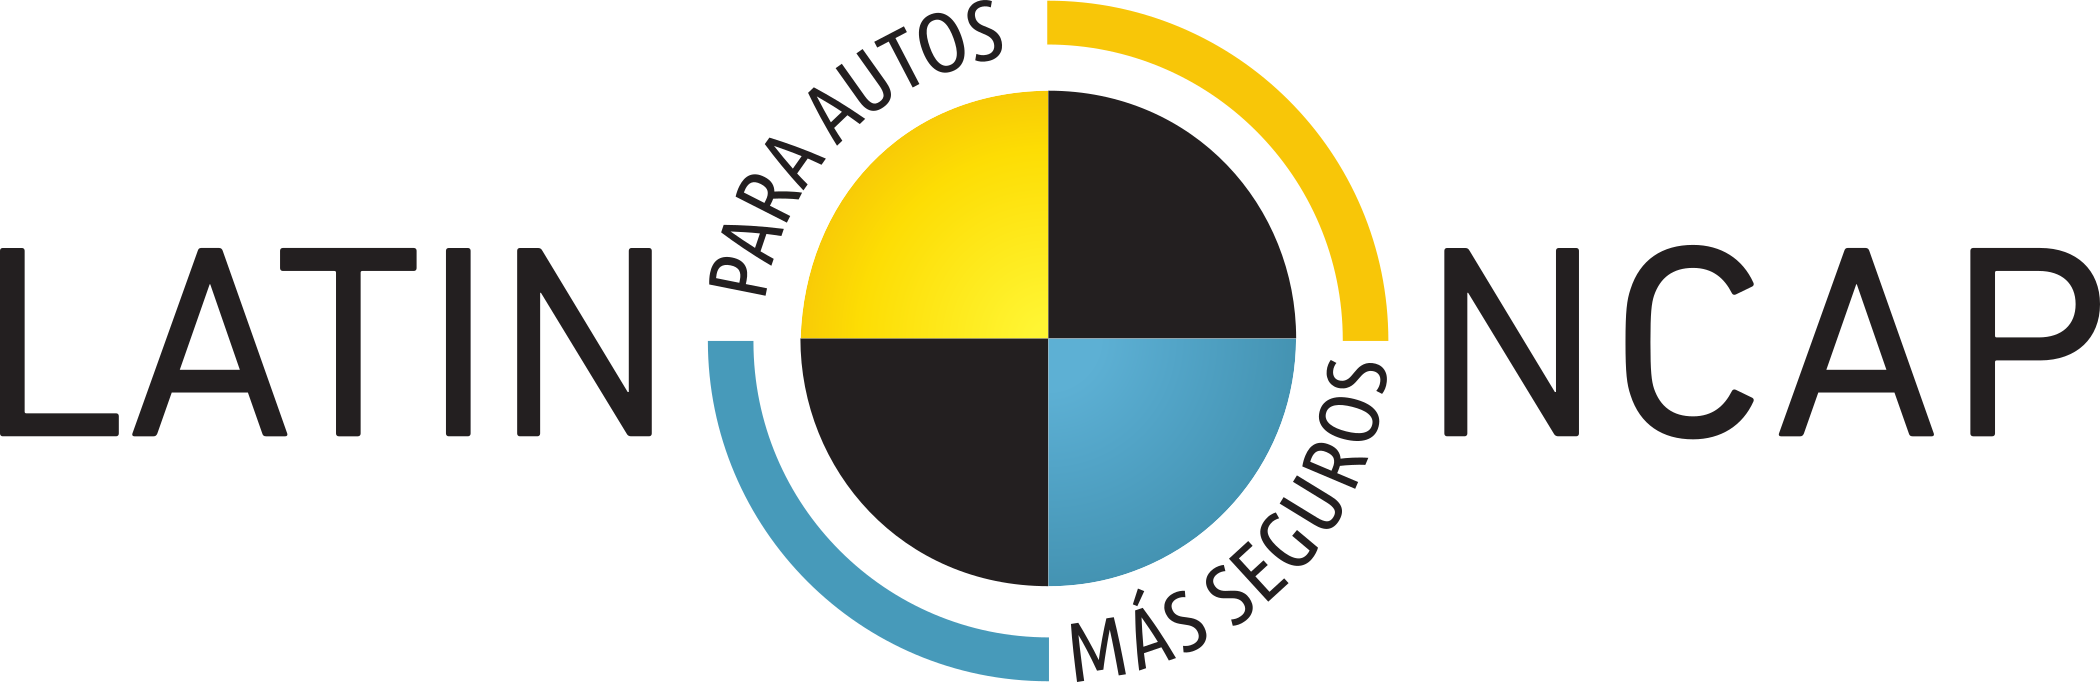 Latin NCAP Logo.